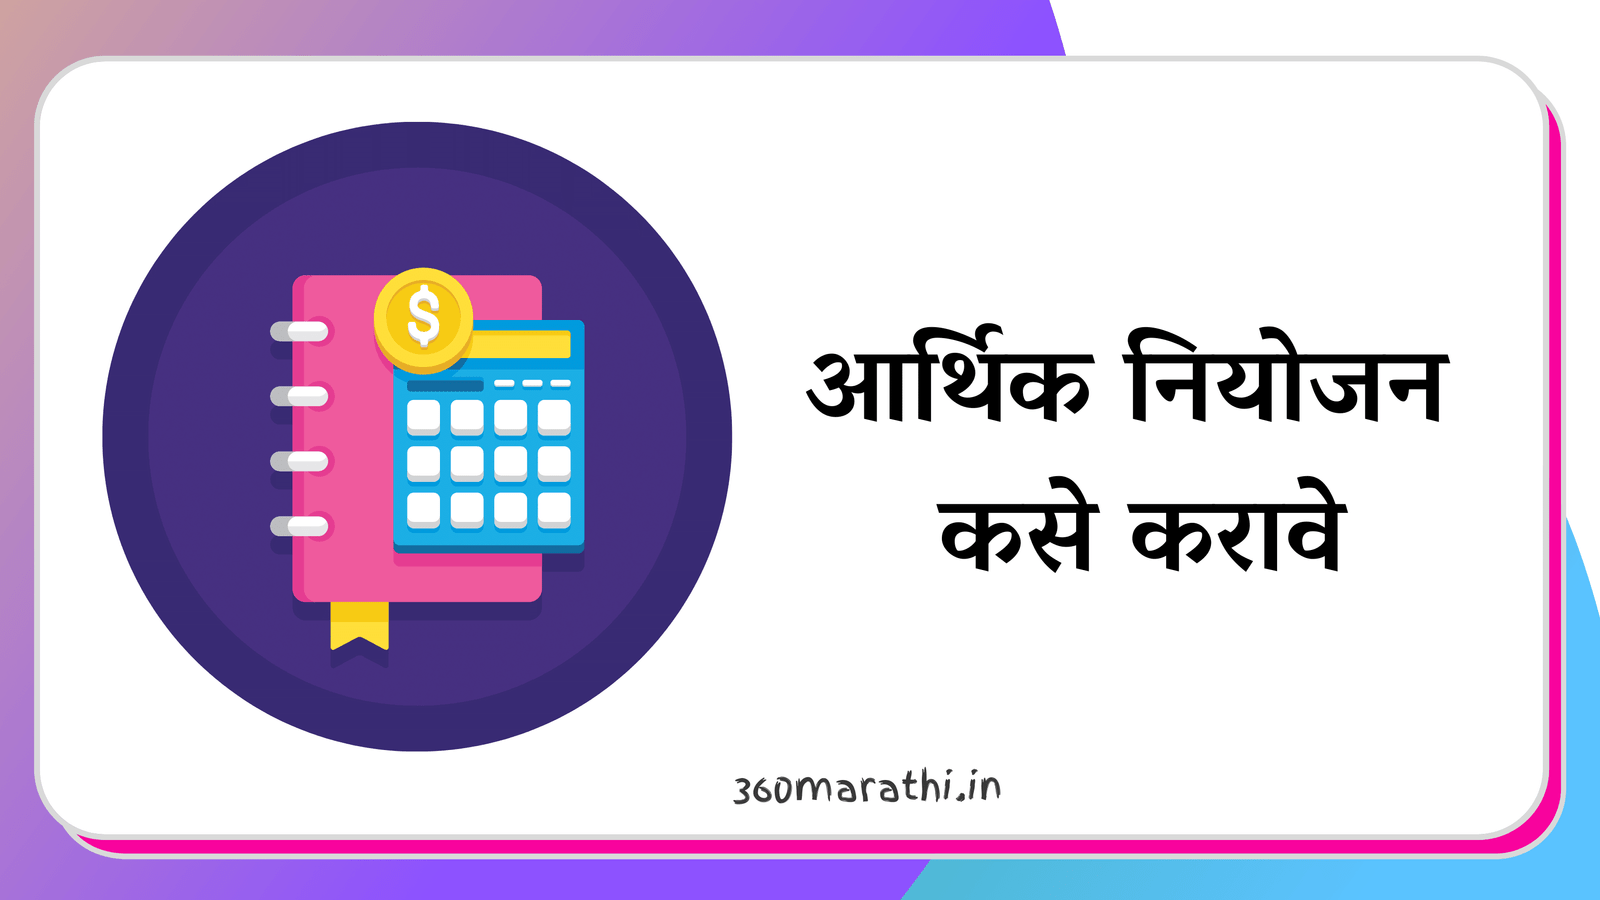 Financial Planning in Marathi